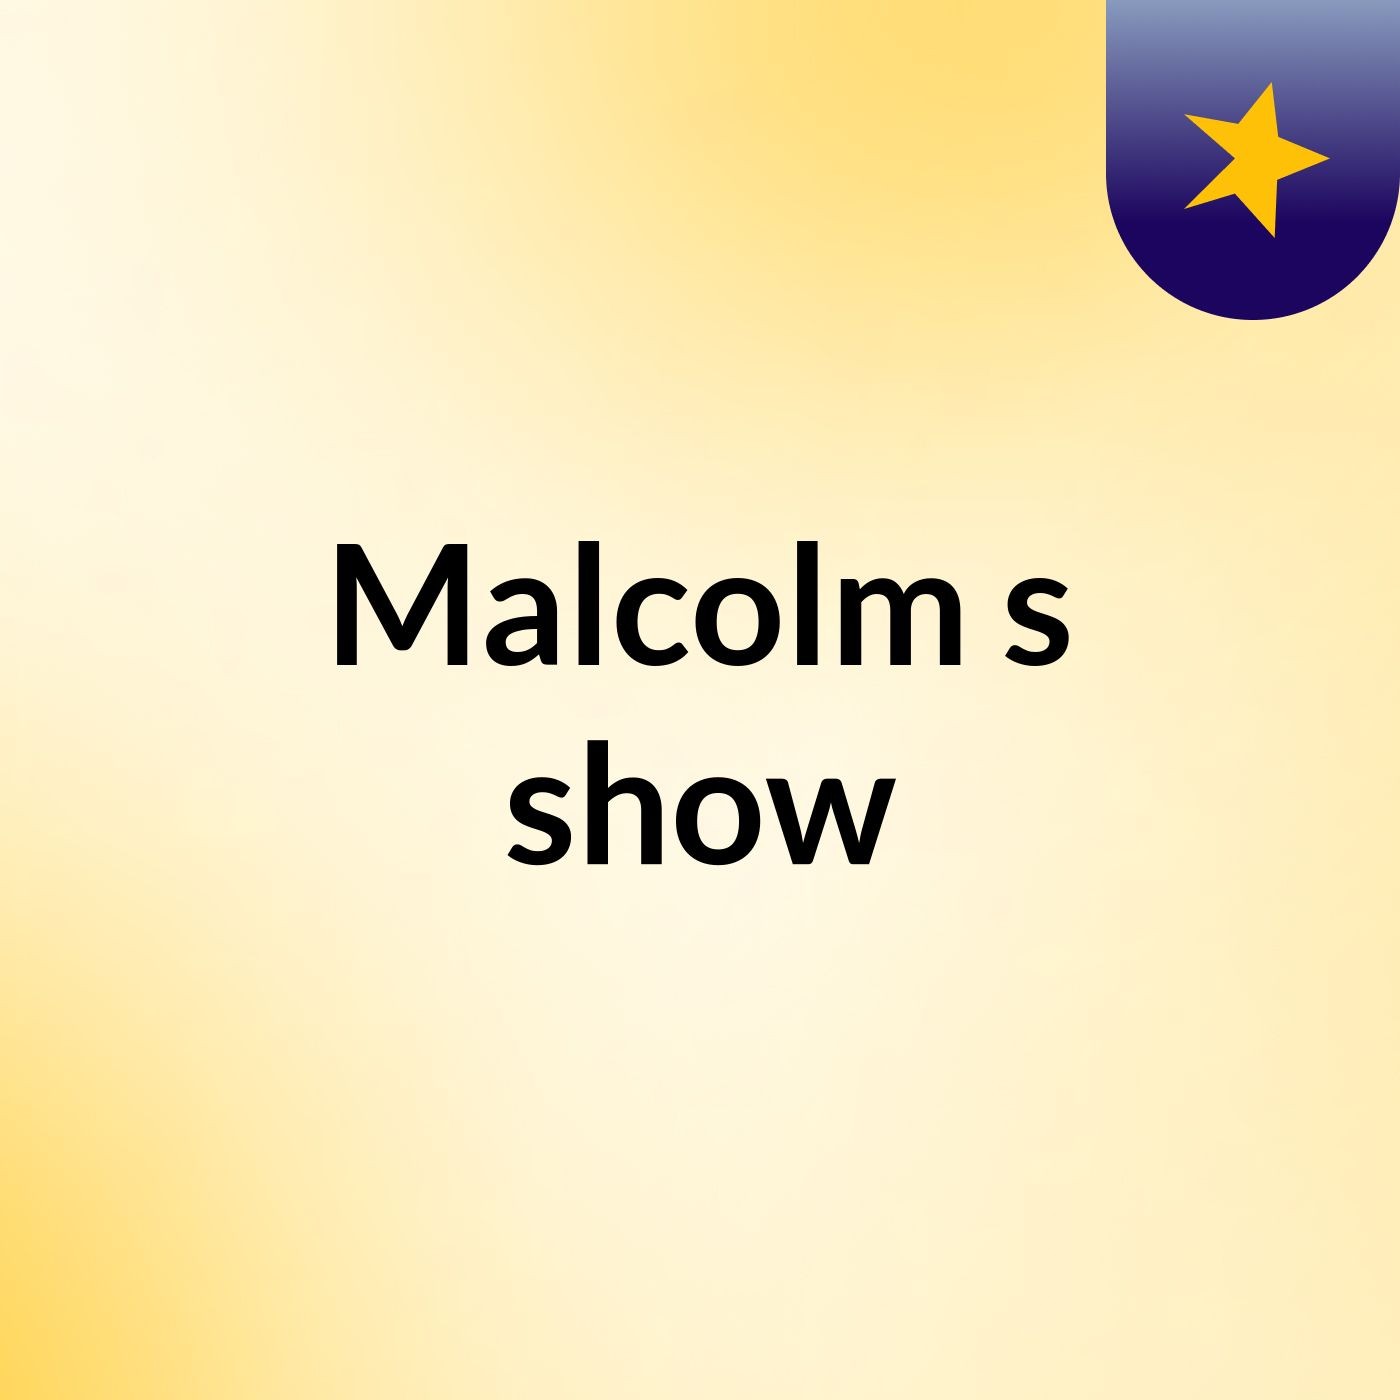 Malcolm's show